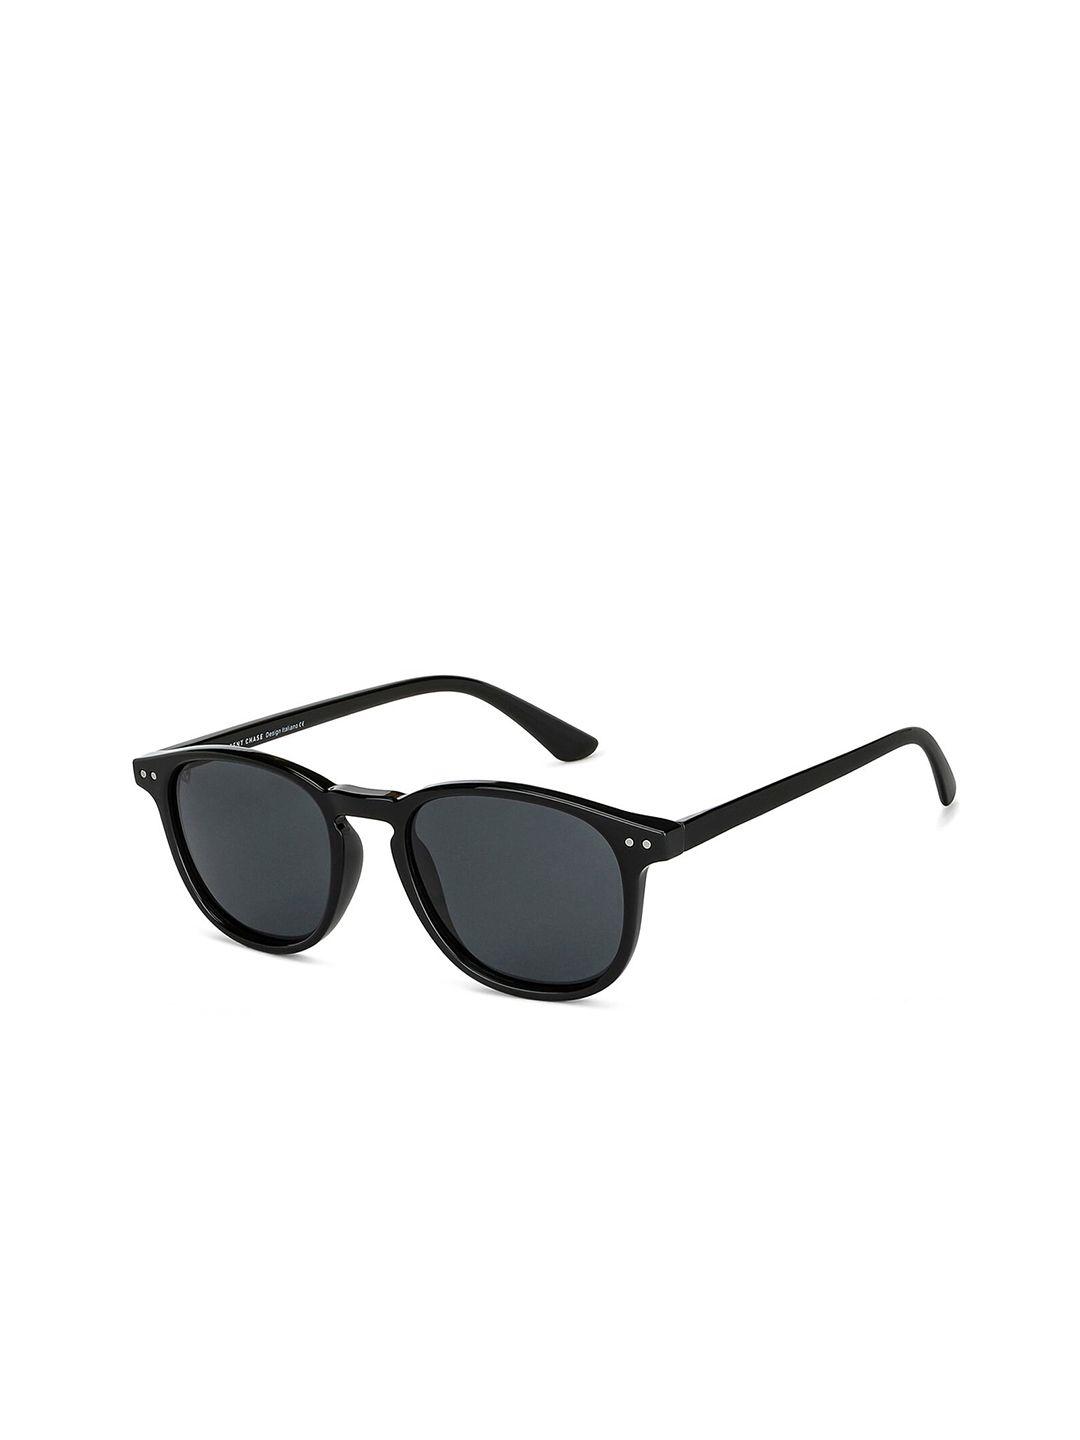 vincent chase unisex grey lens & black round sunglasses -148971